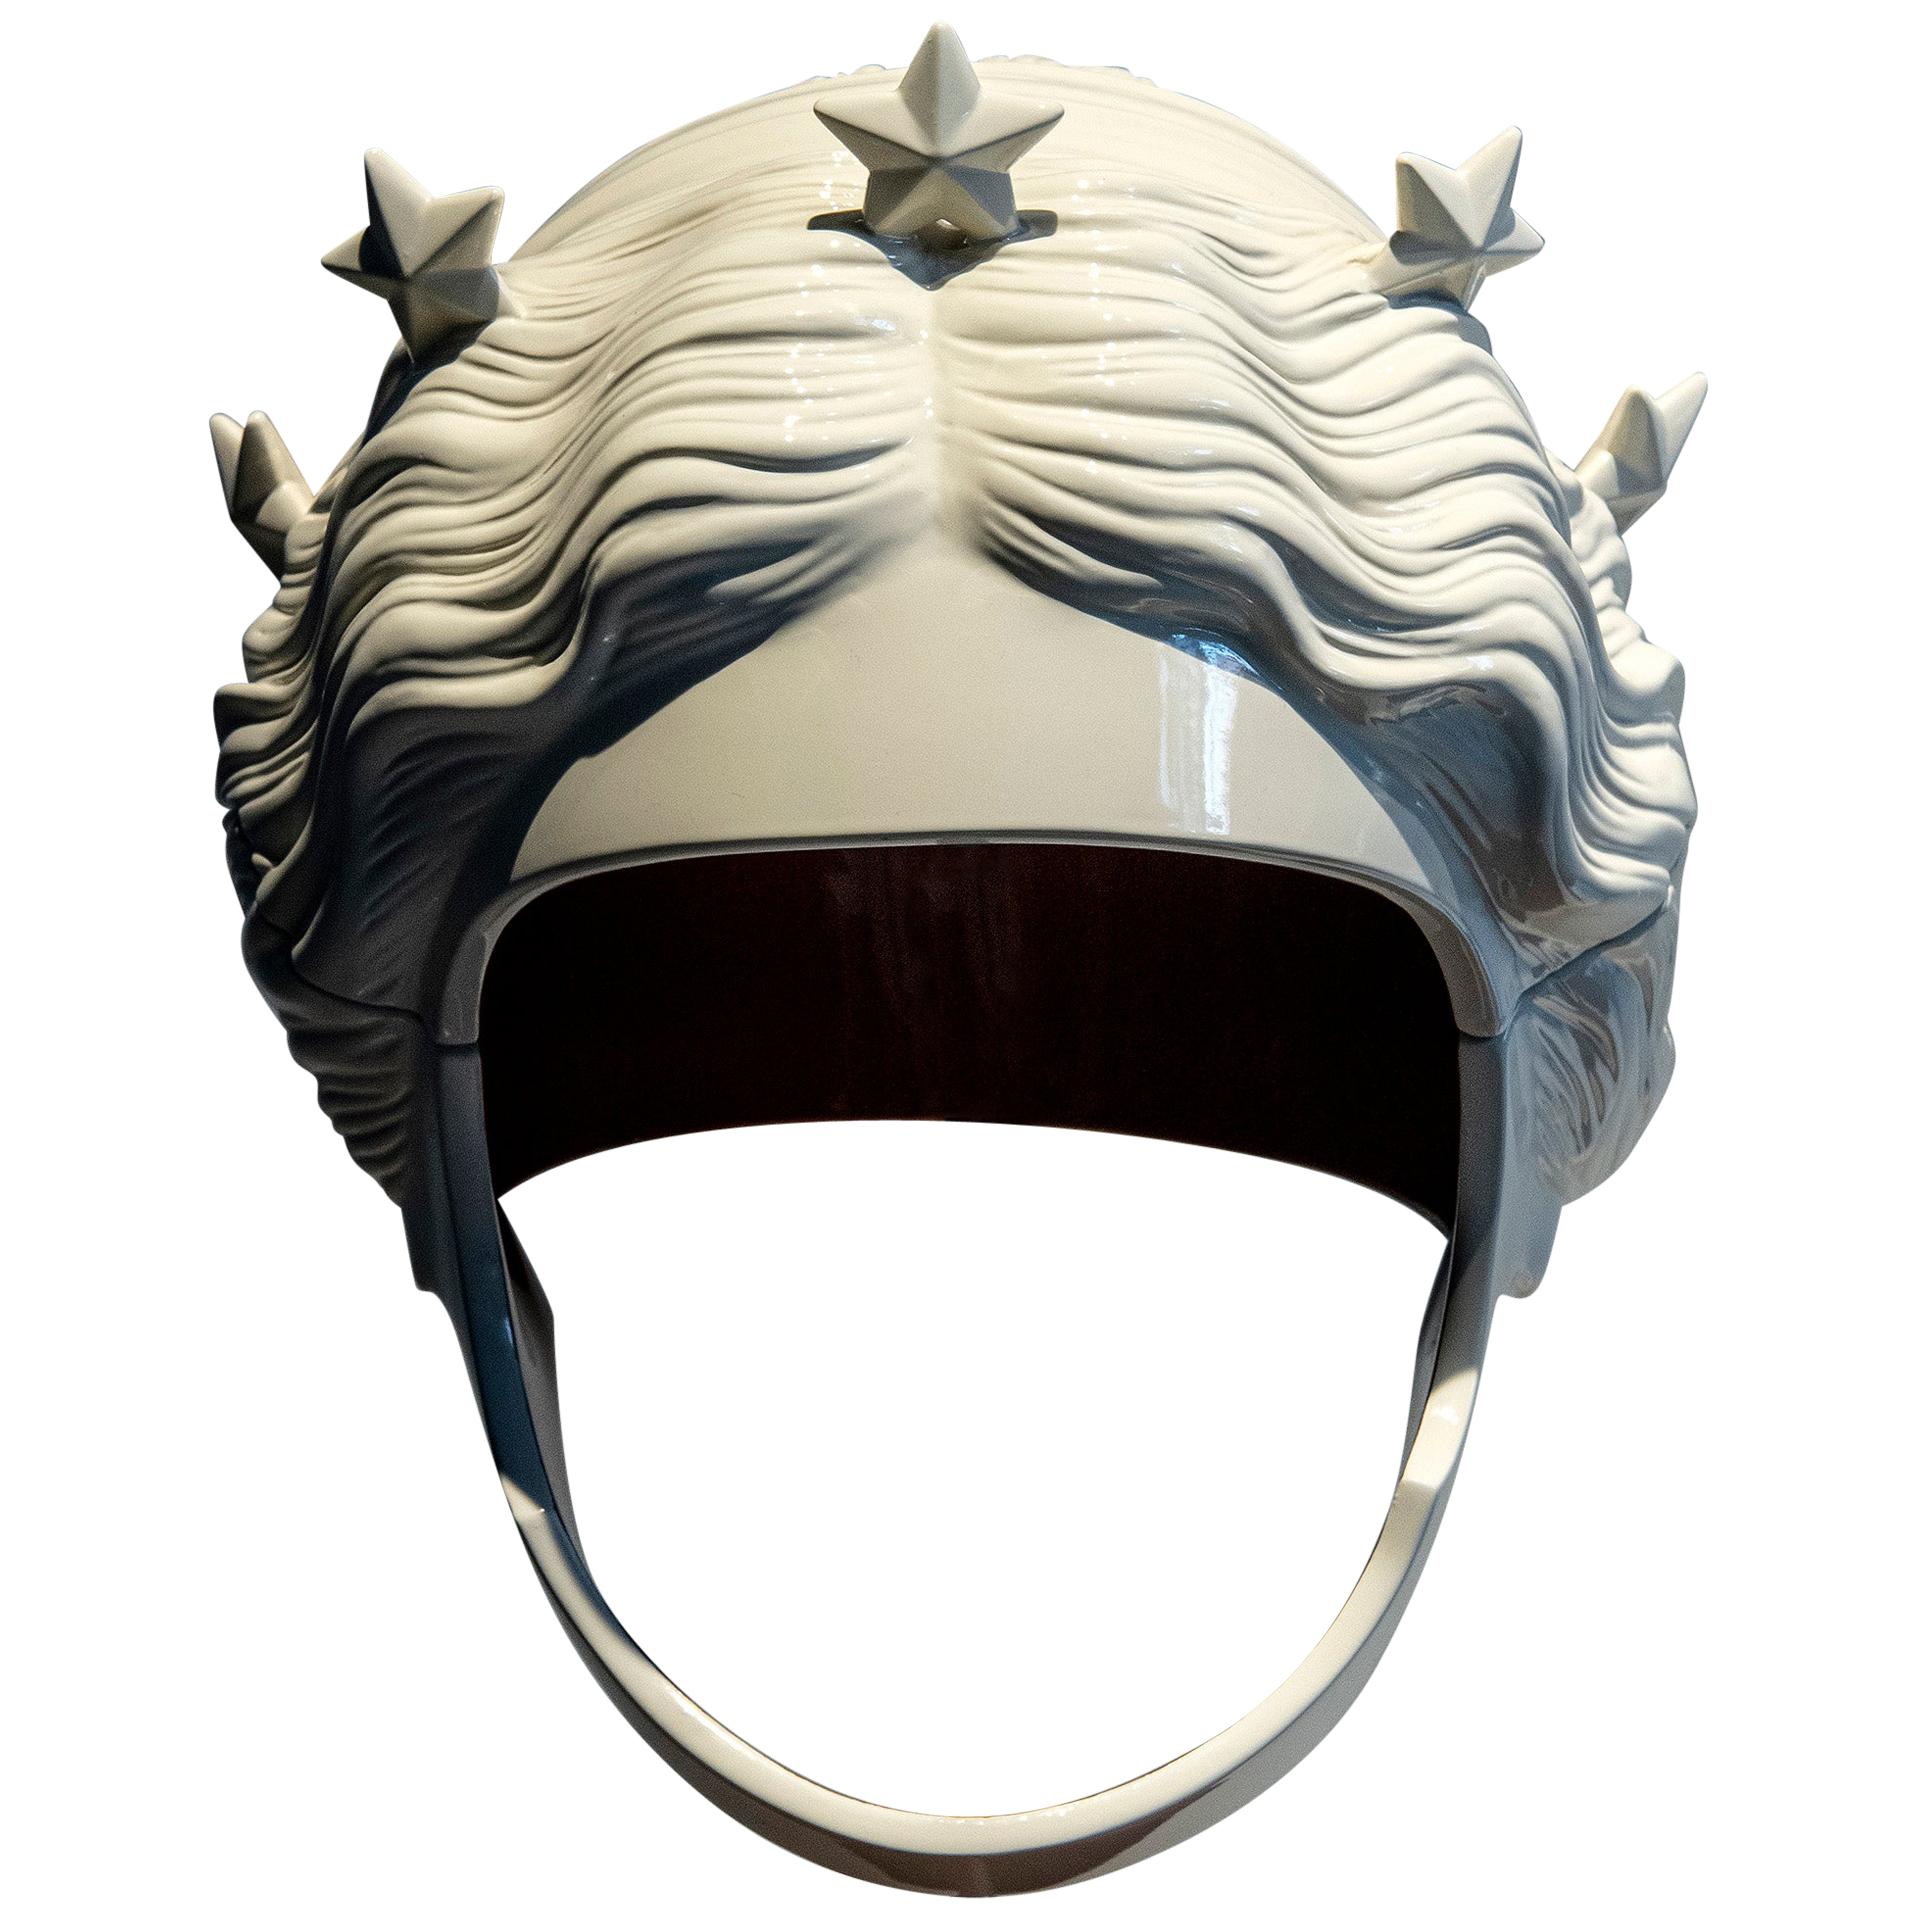 Polyester Resin Helmet Sculpture "Nicée" by Fabián Bercic, Argentina, 2021